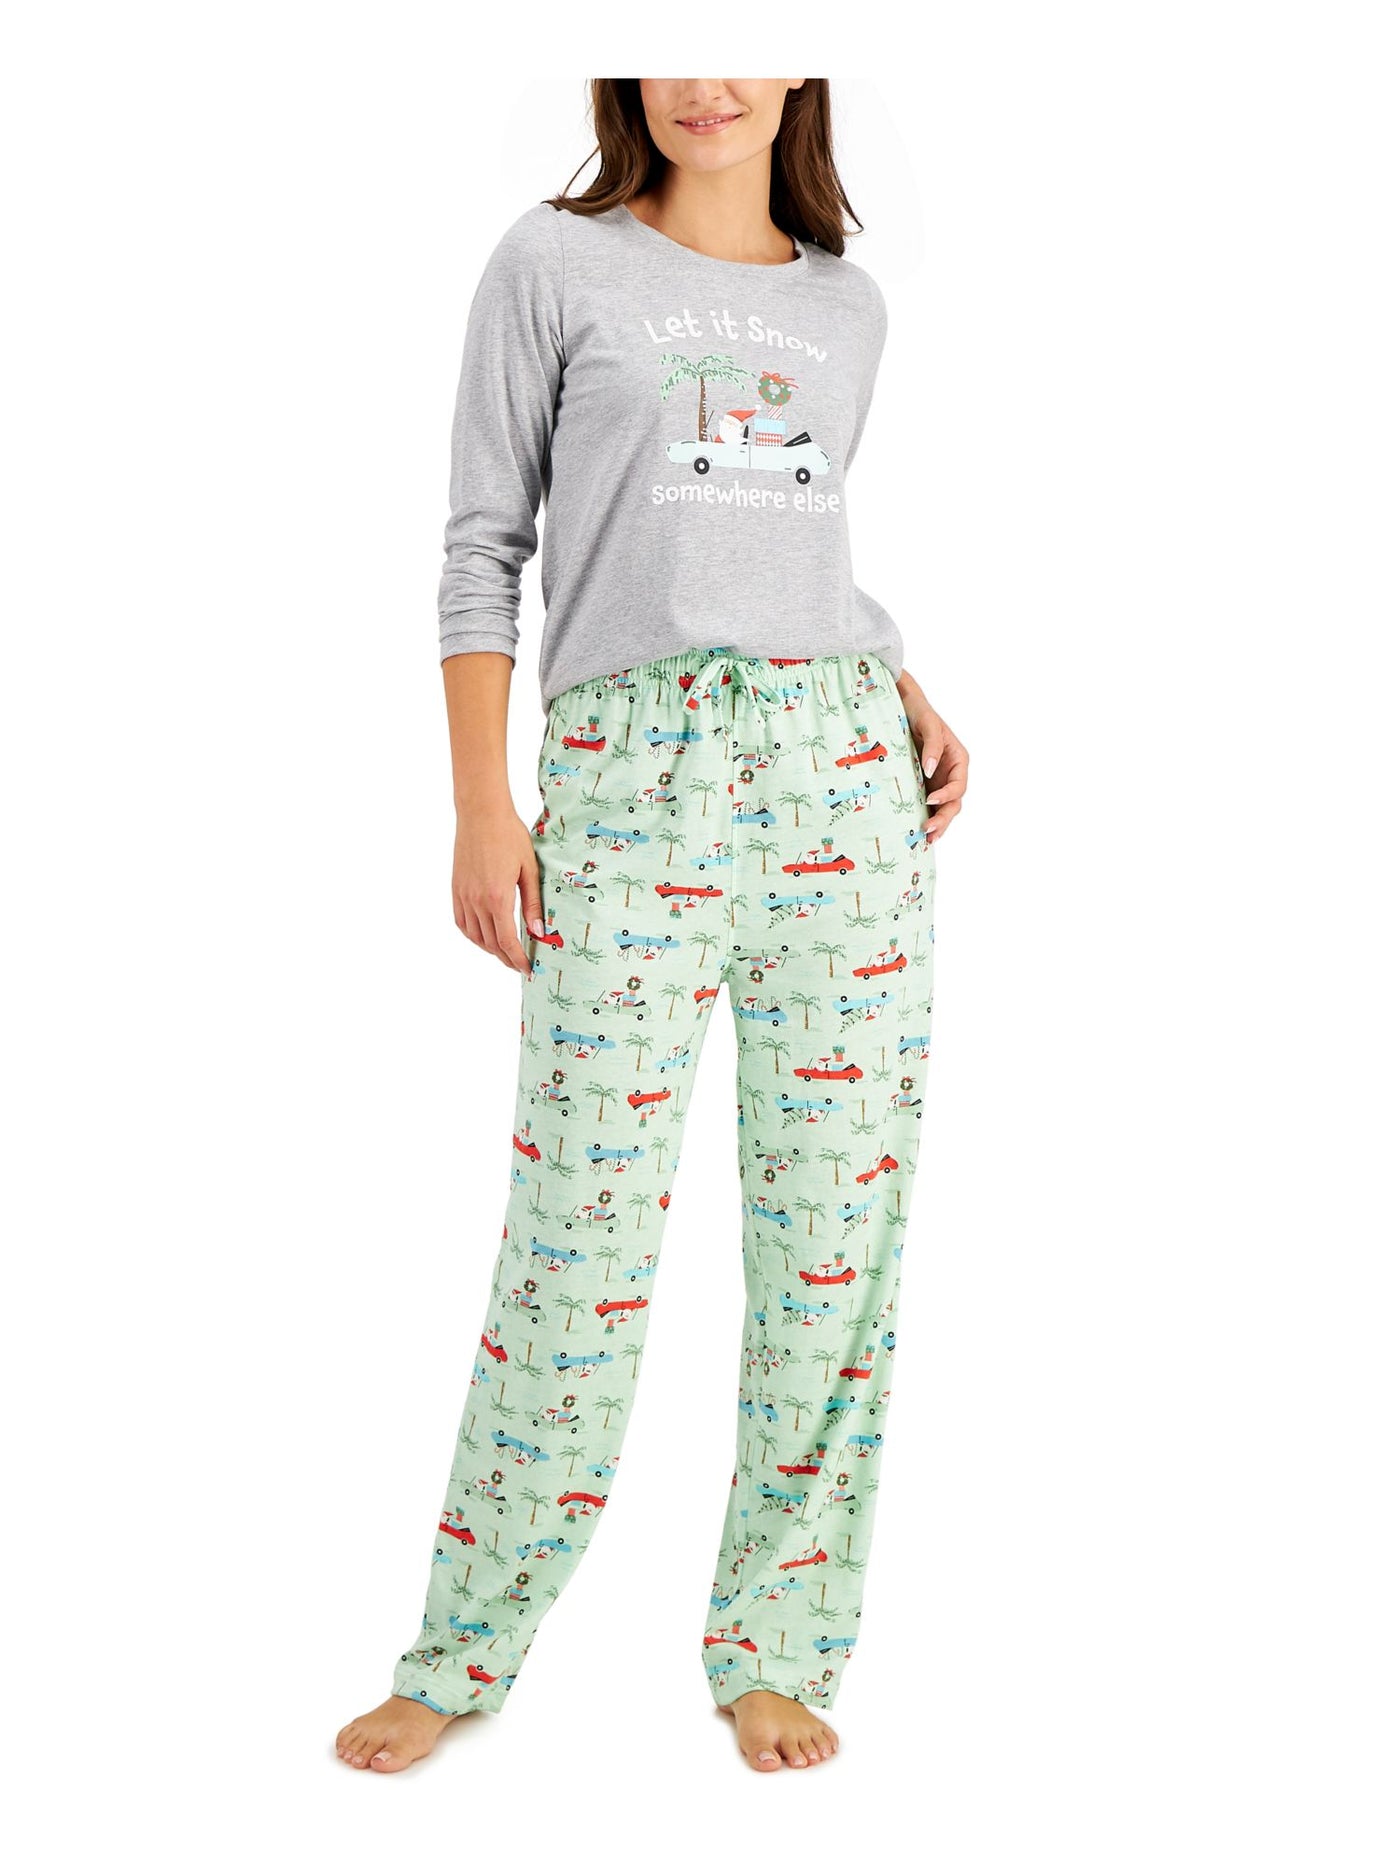 FAMILY PJs Womens Green Graphic Elastic Band Long Sleeve T-Shirt Top Straight leg Pants Pajamas S